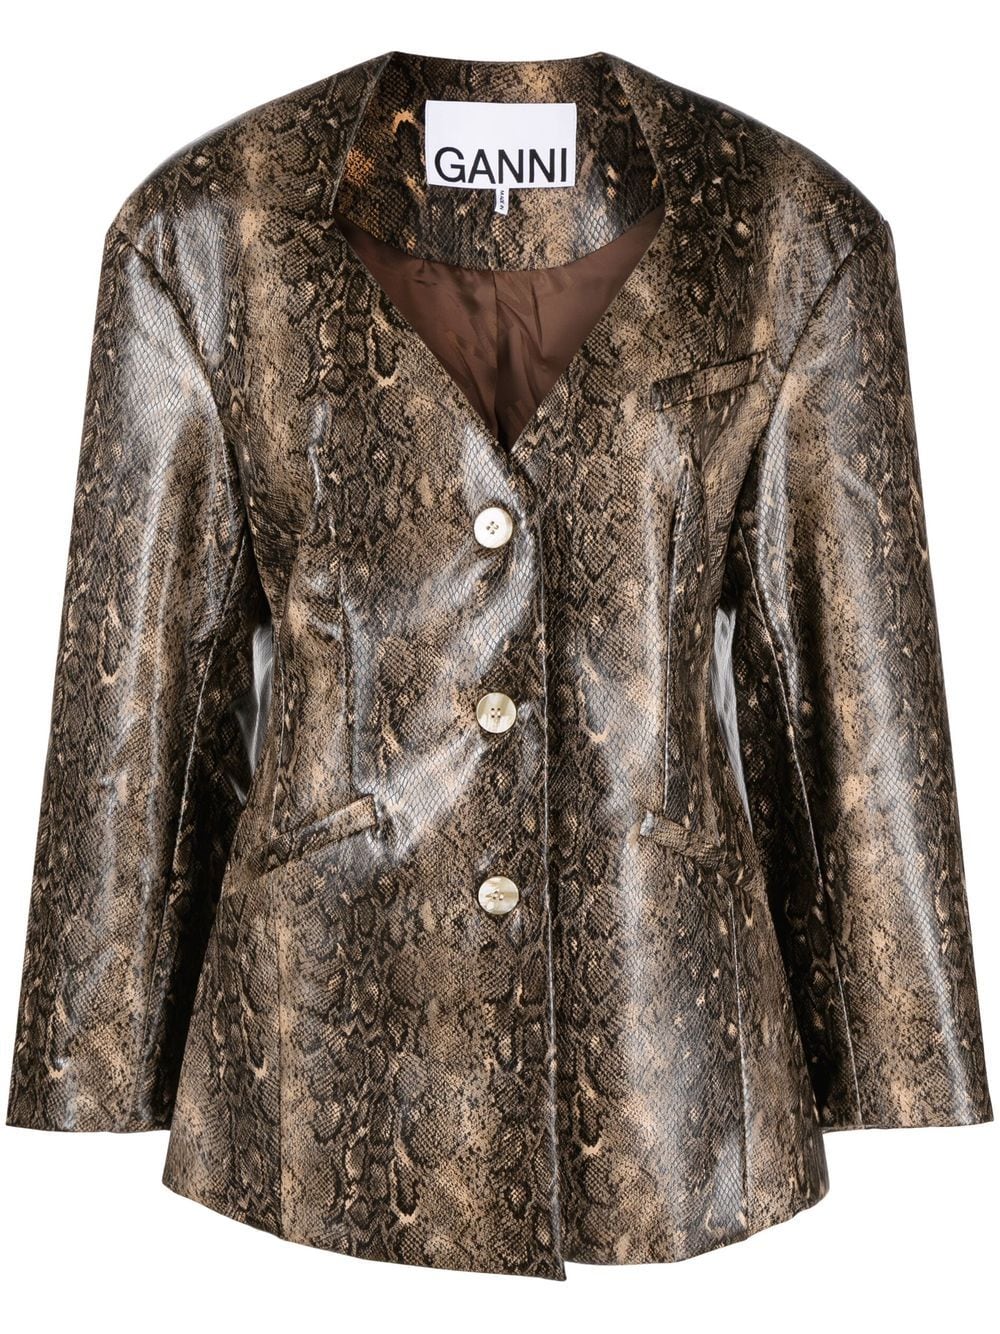 GANNI faux leather snakeskin print jacket - Neutrals